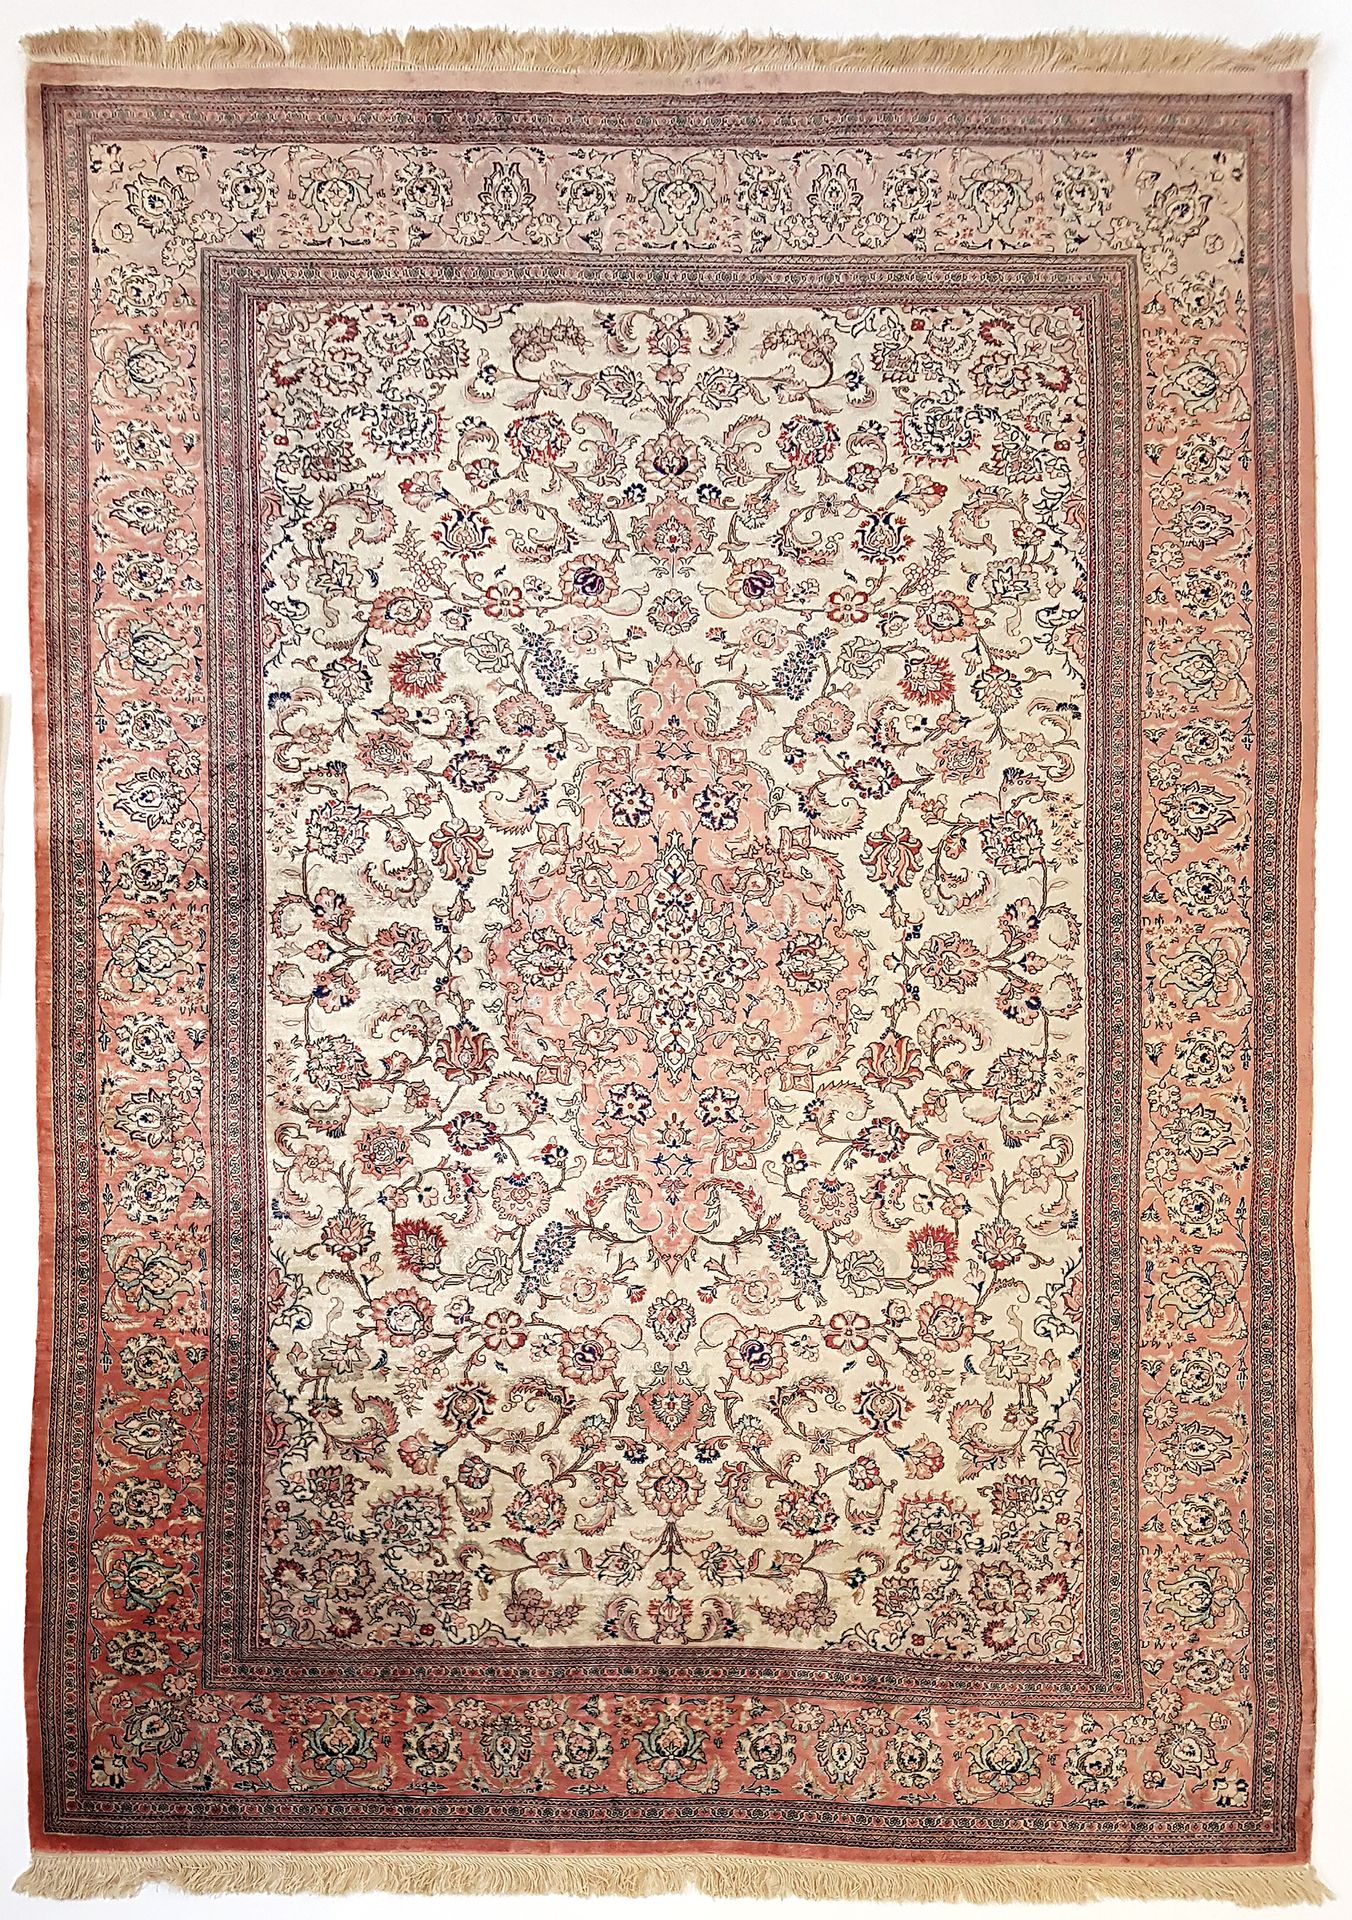 Null Fin tapis Ghoum en soie (Iran), vers 1980

Dimensions : 196 x 138 cm

Carac&hellip;